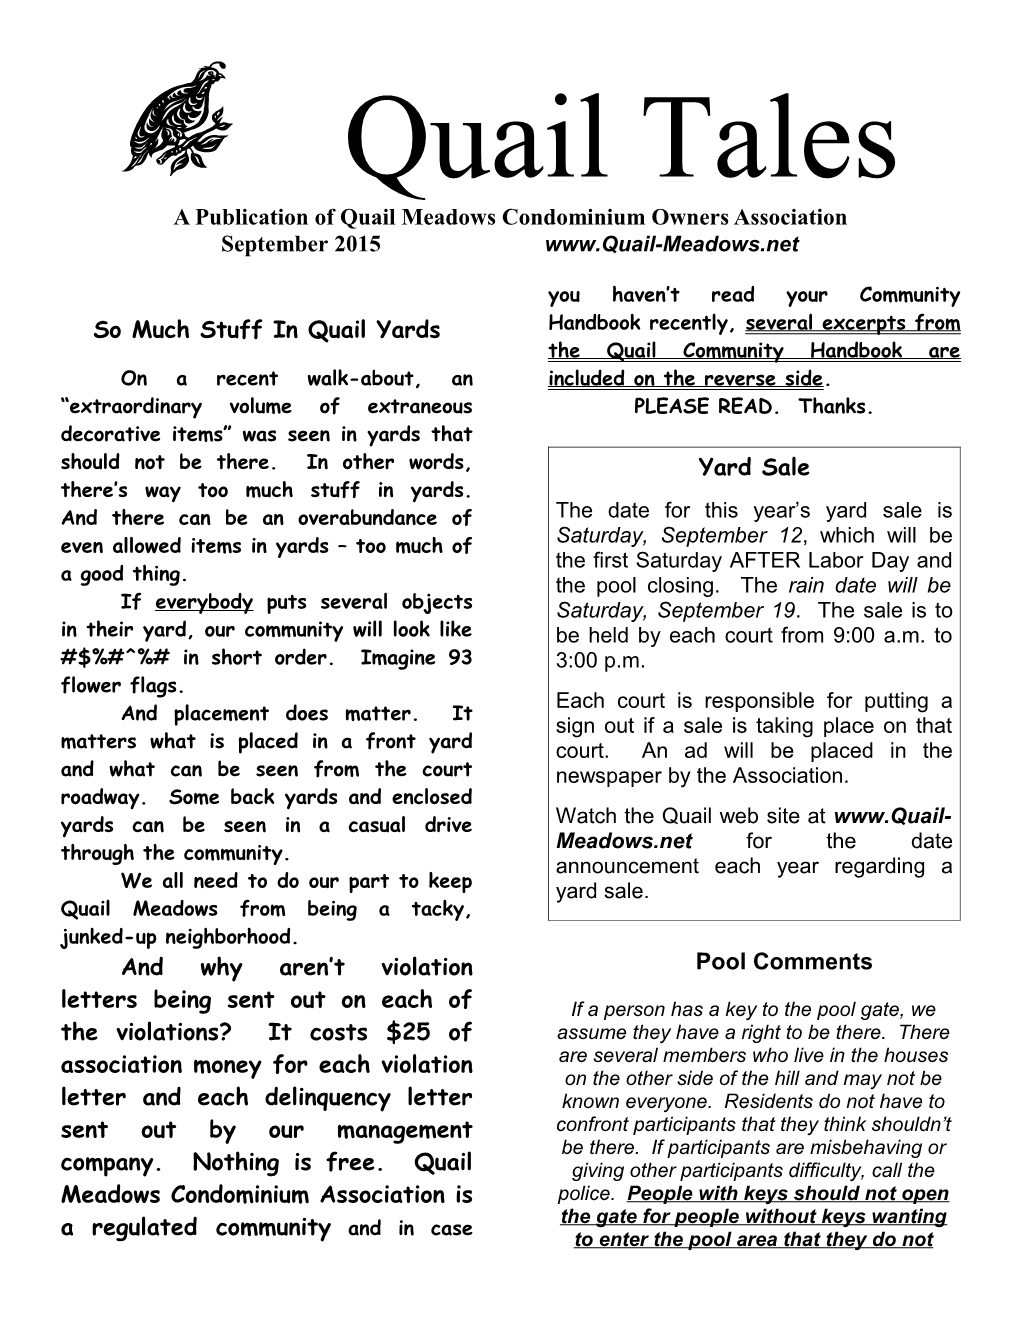 A Publication of Quail Meadows Condominium Owners Association